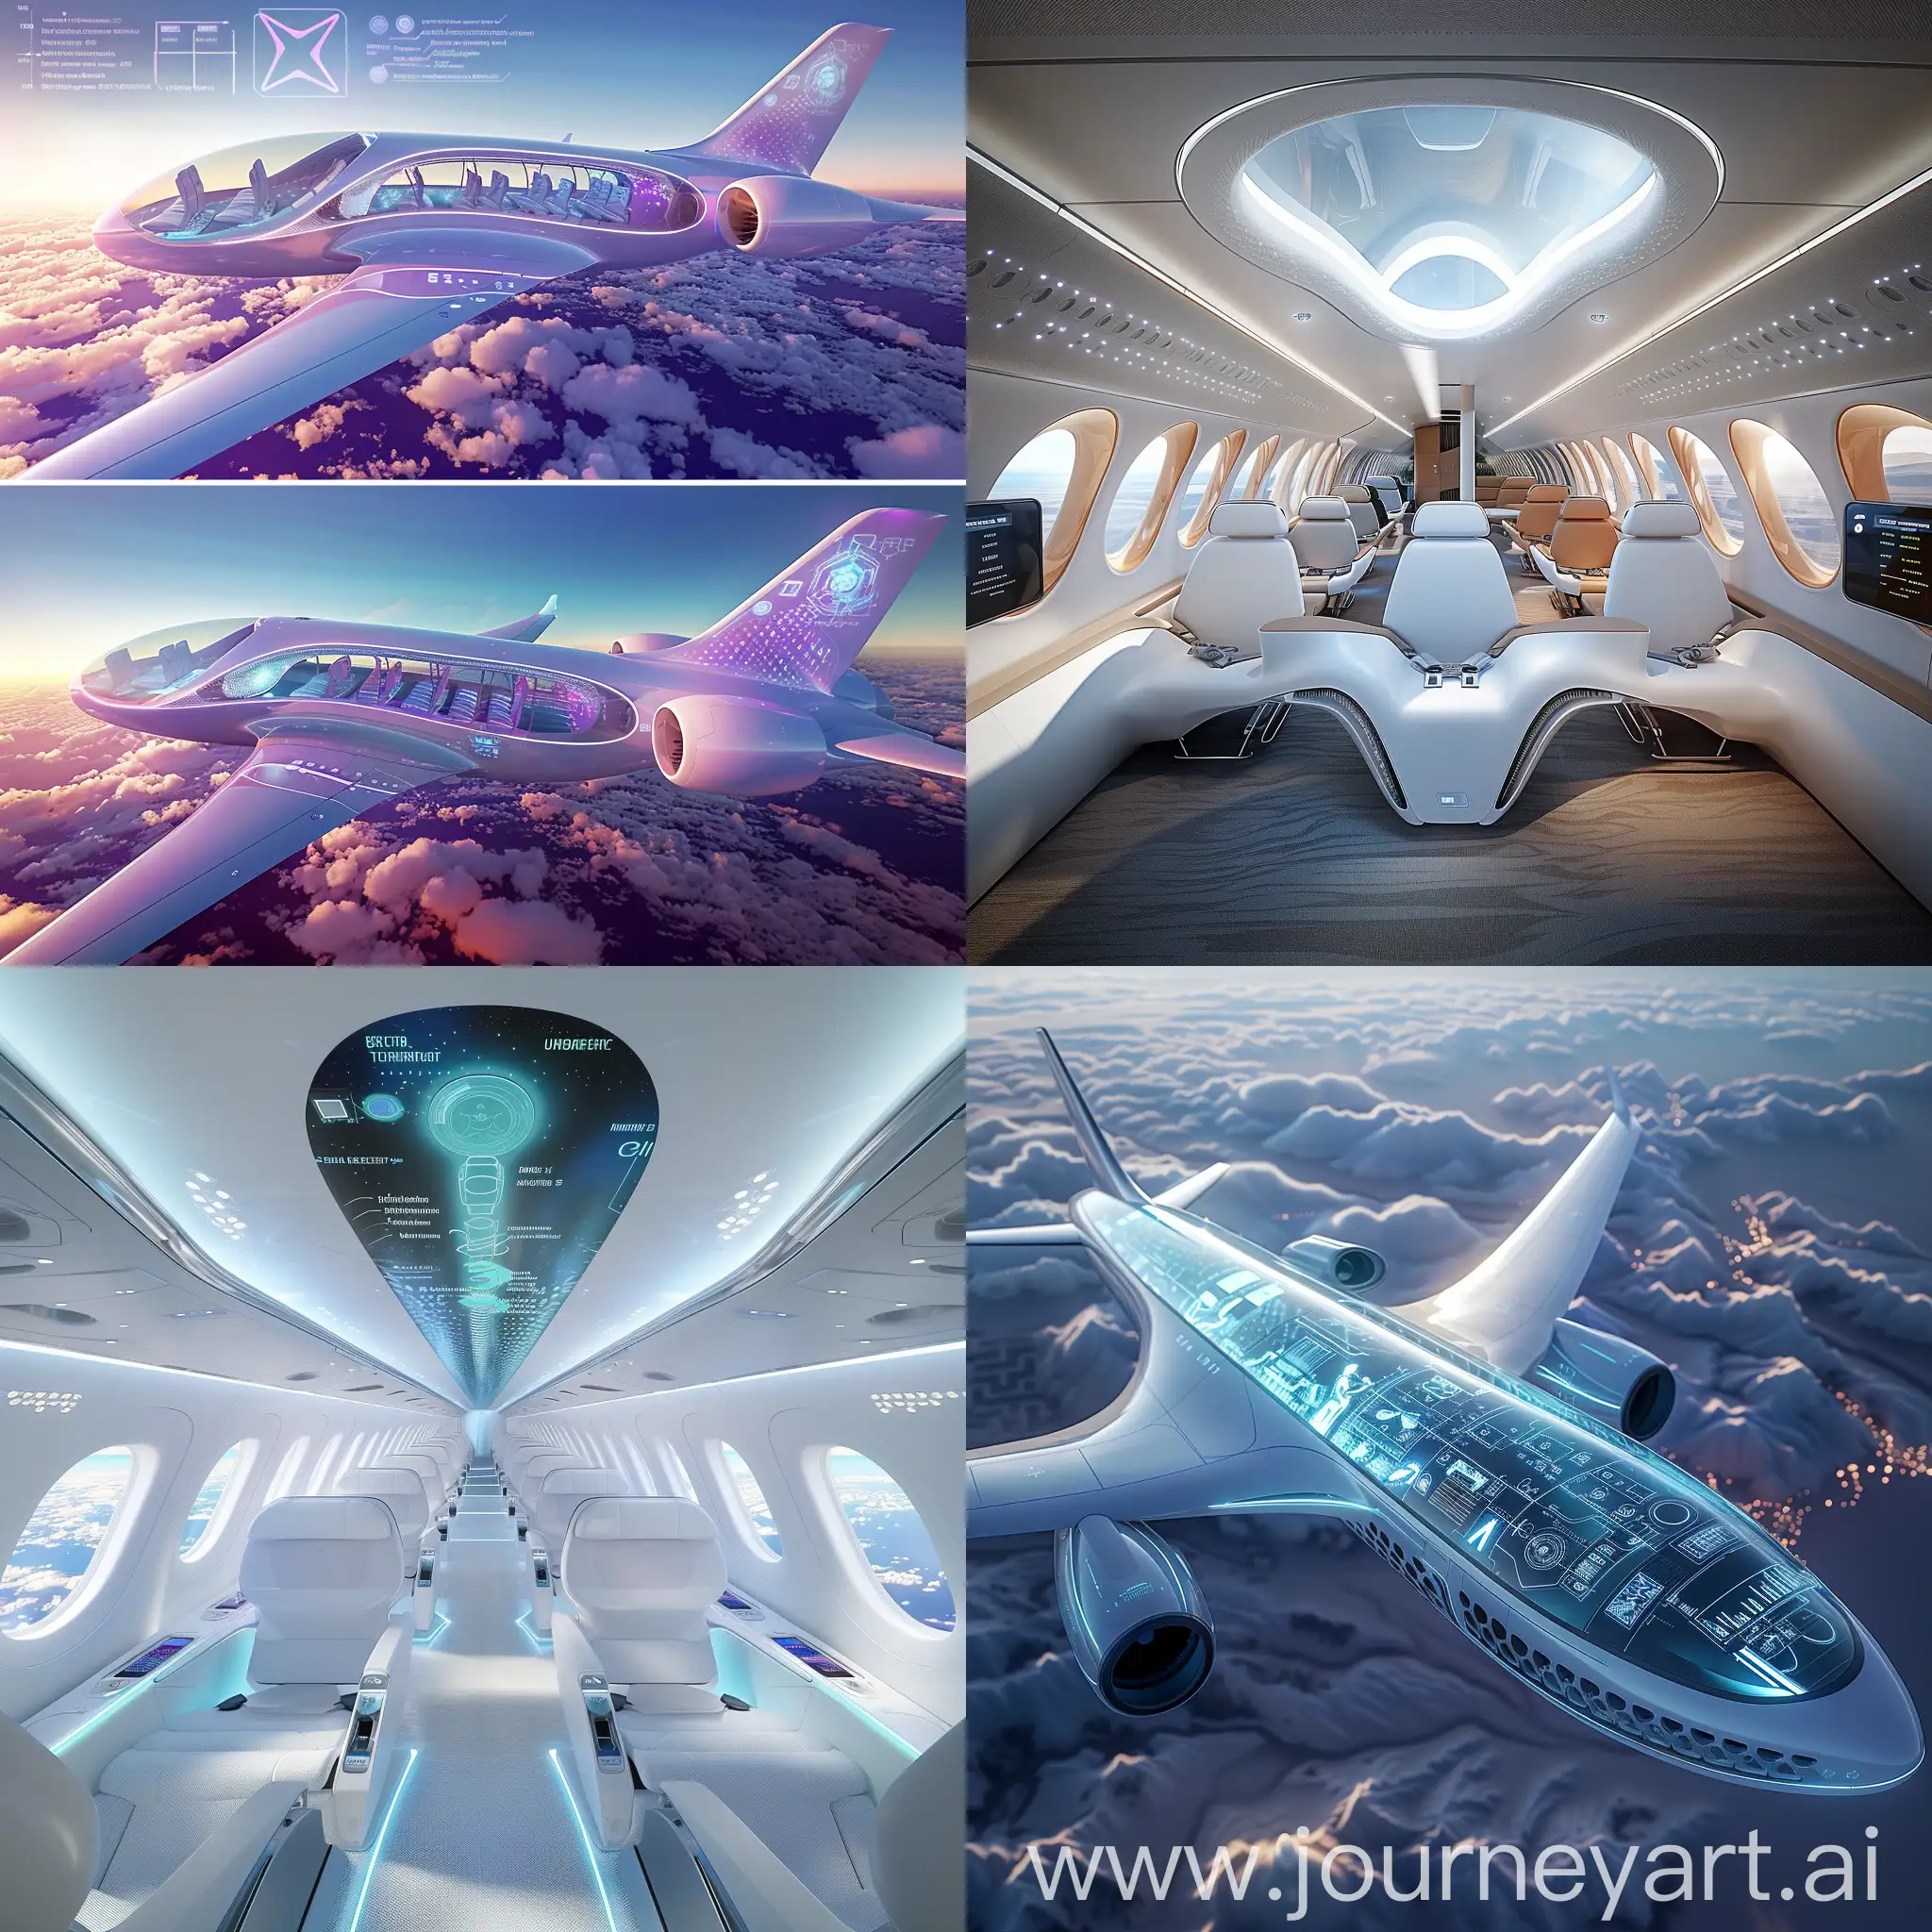 NextGen-Passenger-Aircraft-Futuristic-Features-and-Tech-Marvels